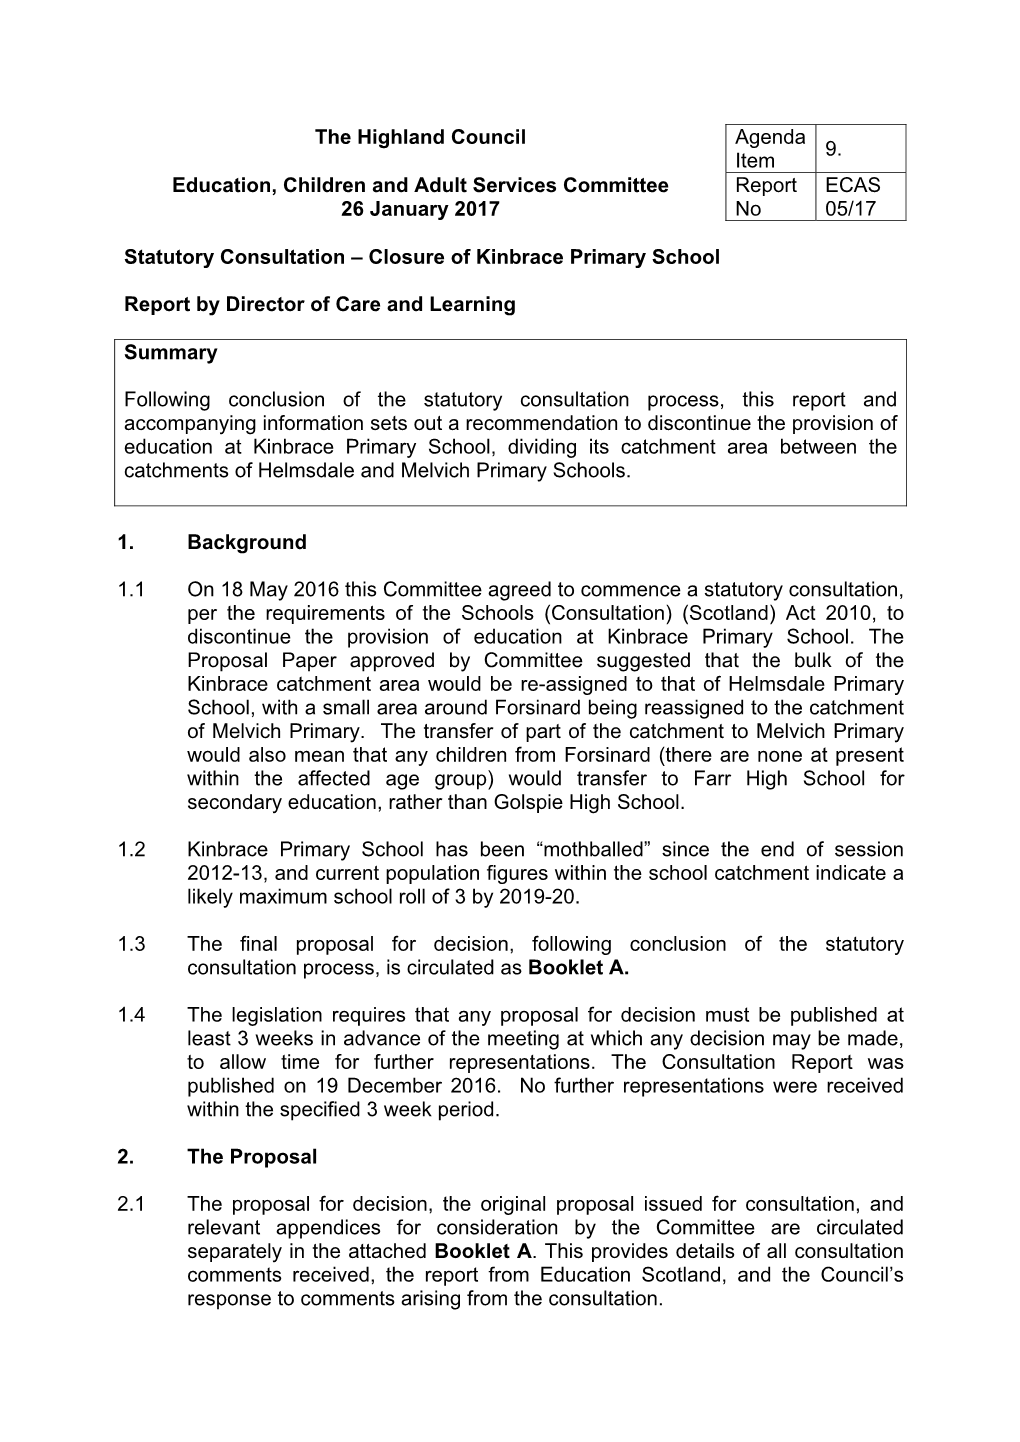 Statutory Consultation – Closure of Kinbrace Primary School